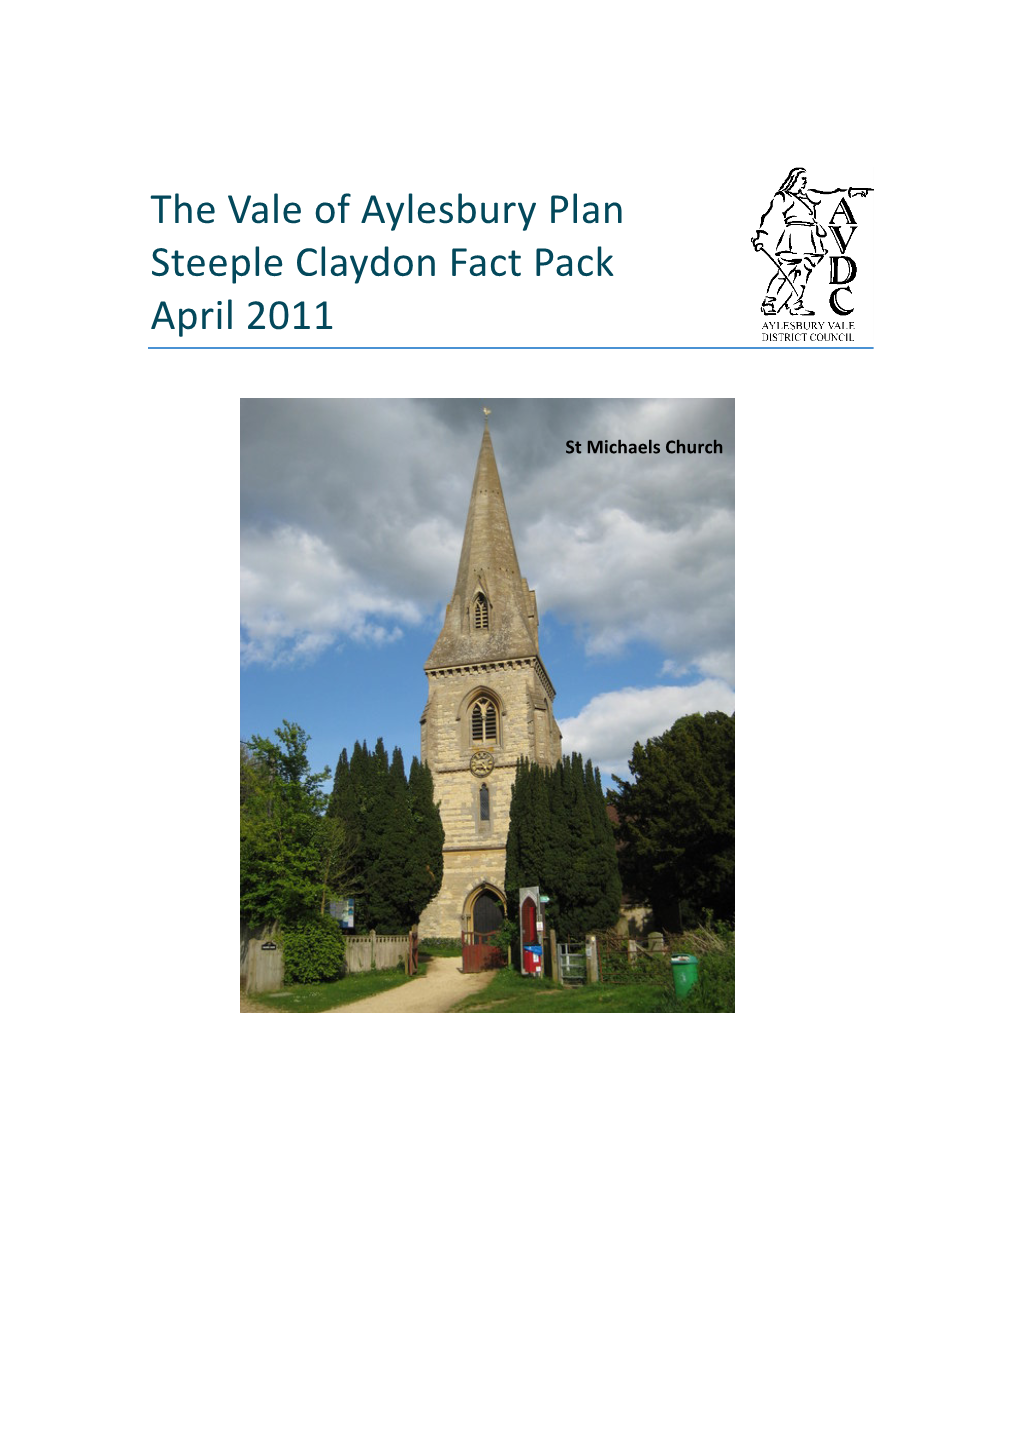 Steeple Claydon Fact Pack April 2011